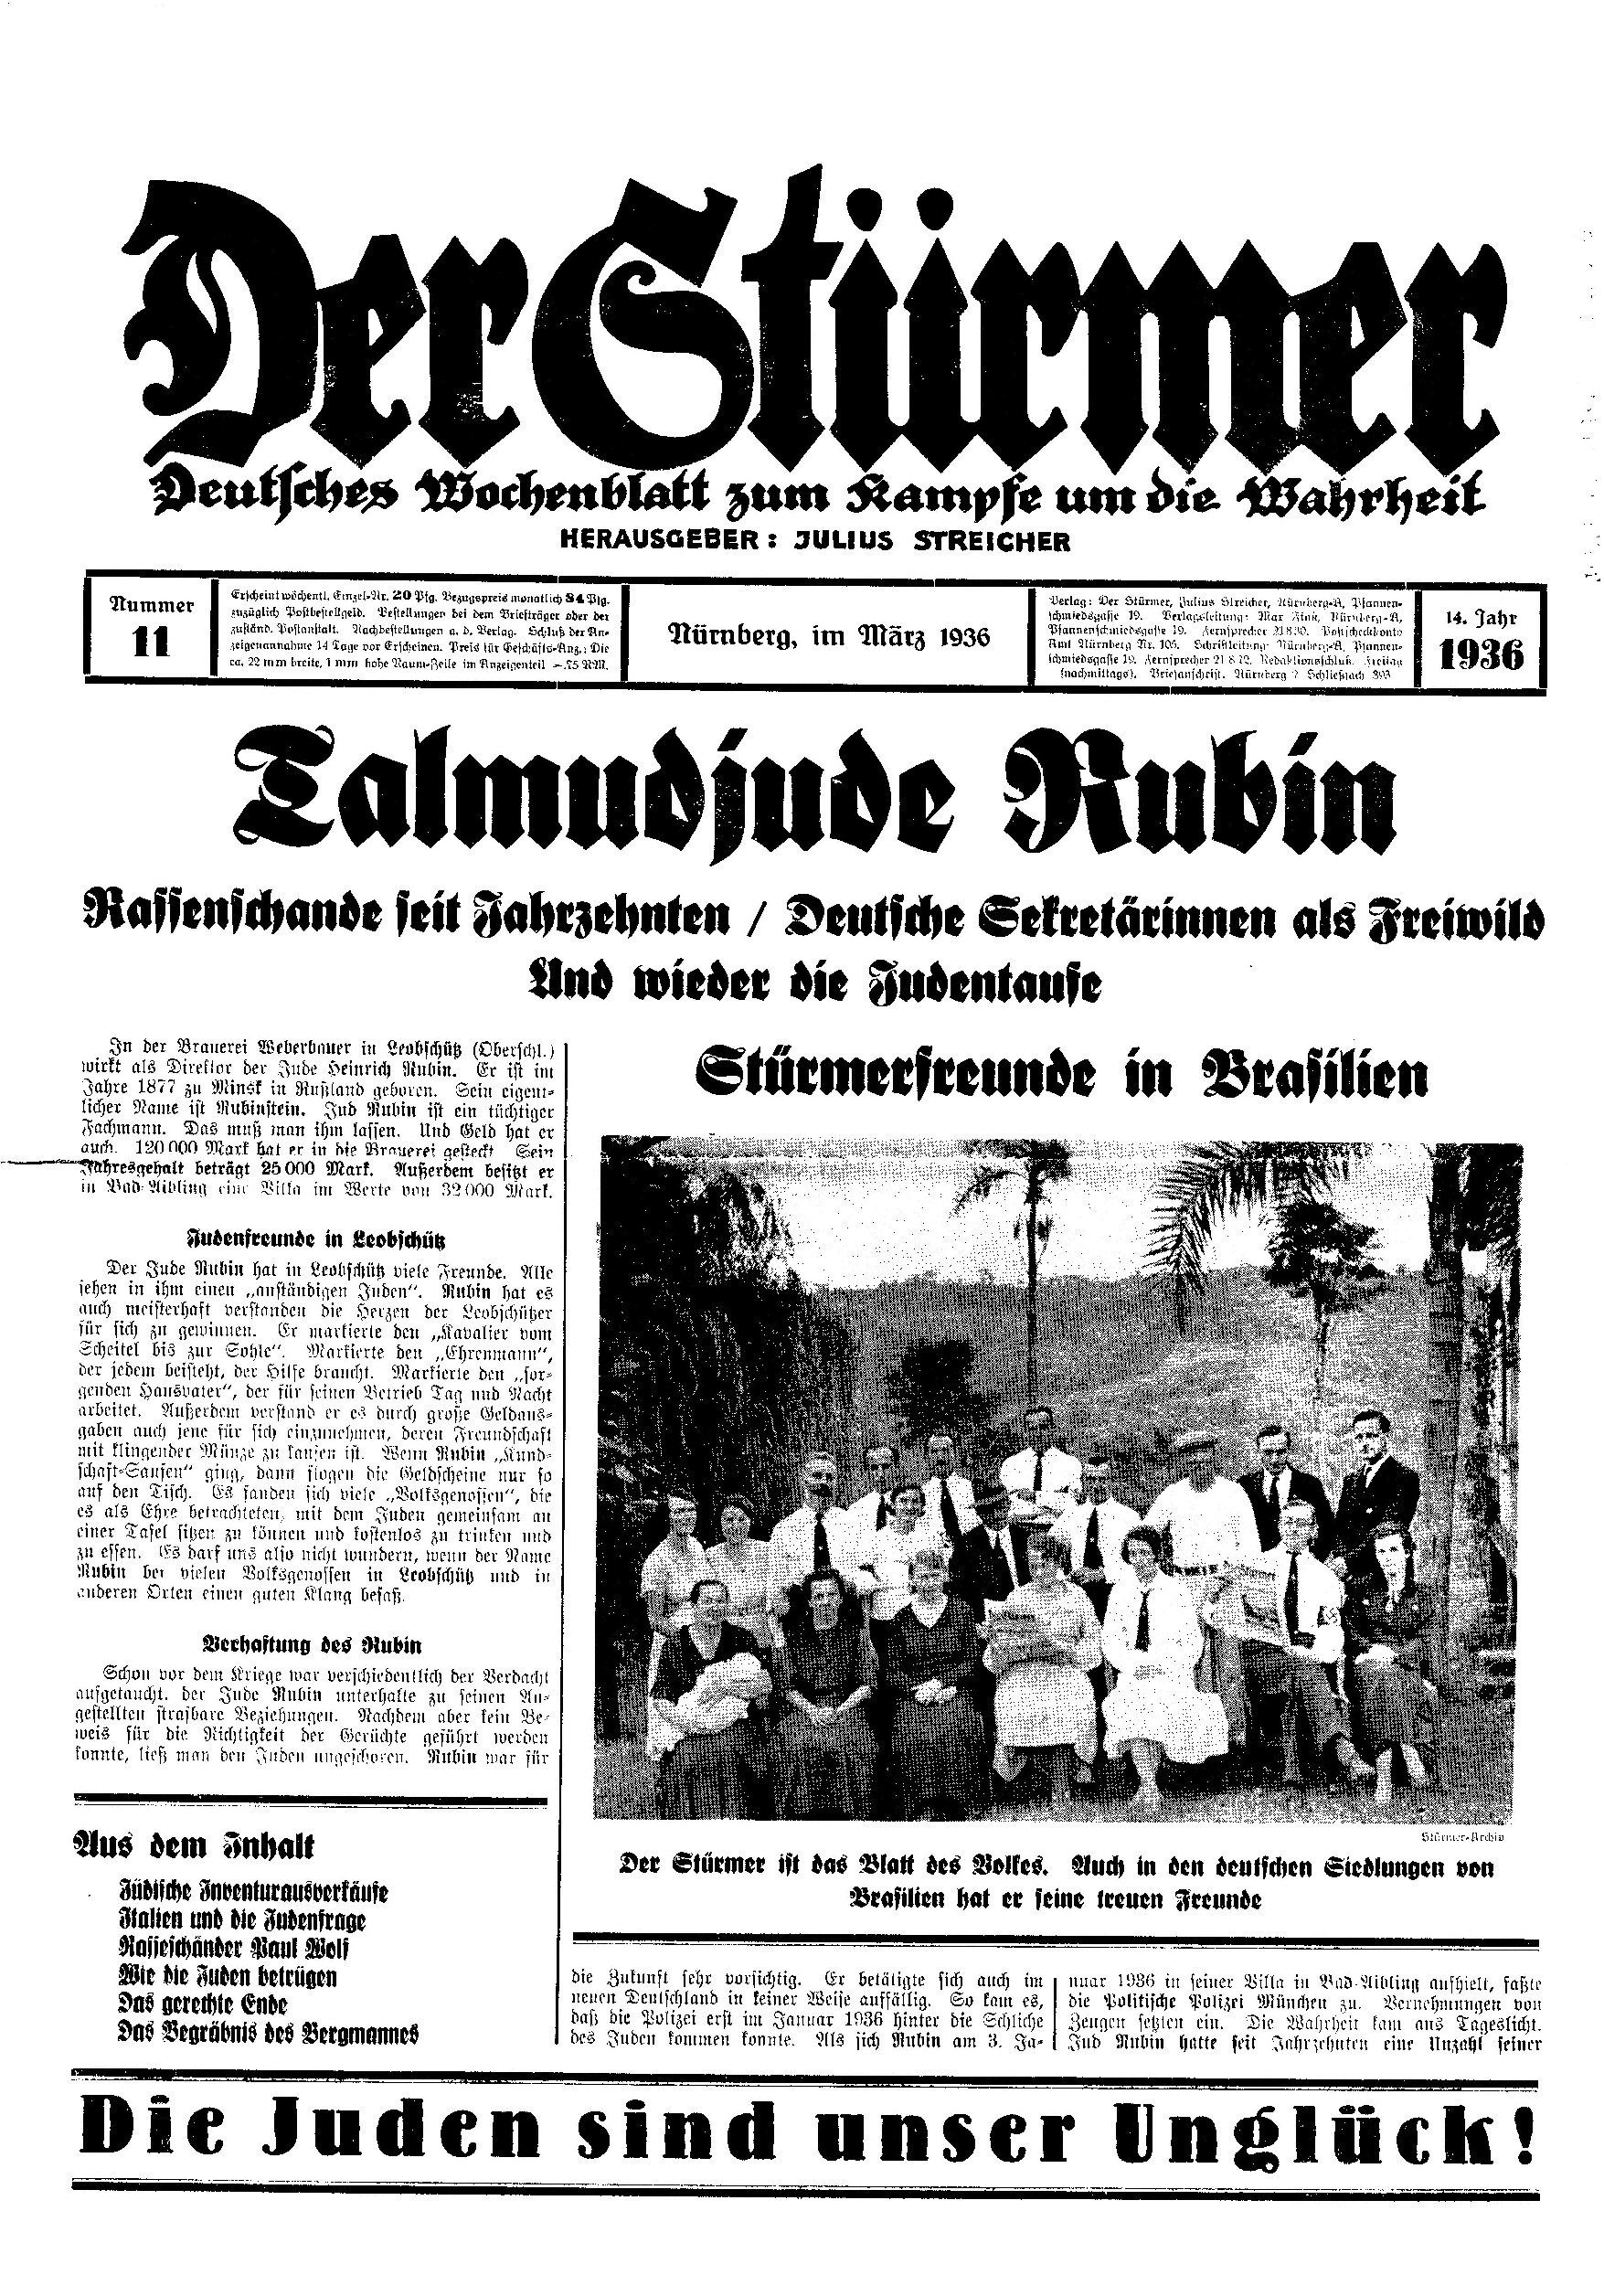 Der Stürmer - 1936 Nr. 11 - Talmudjude Rubin